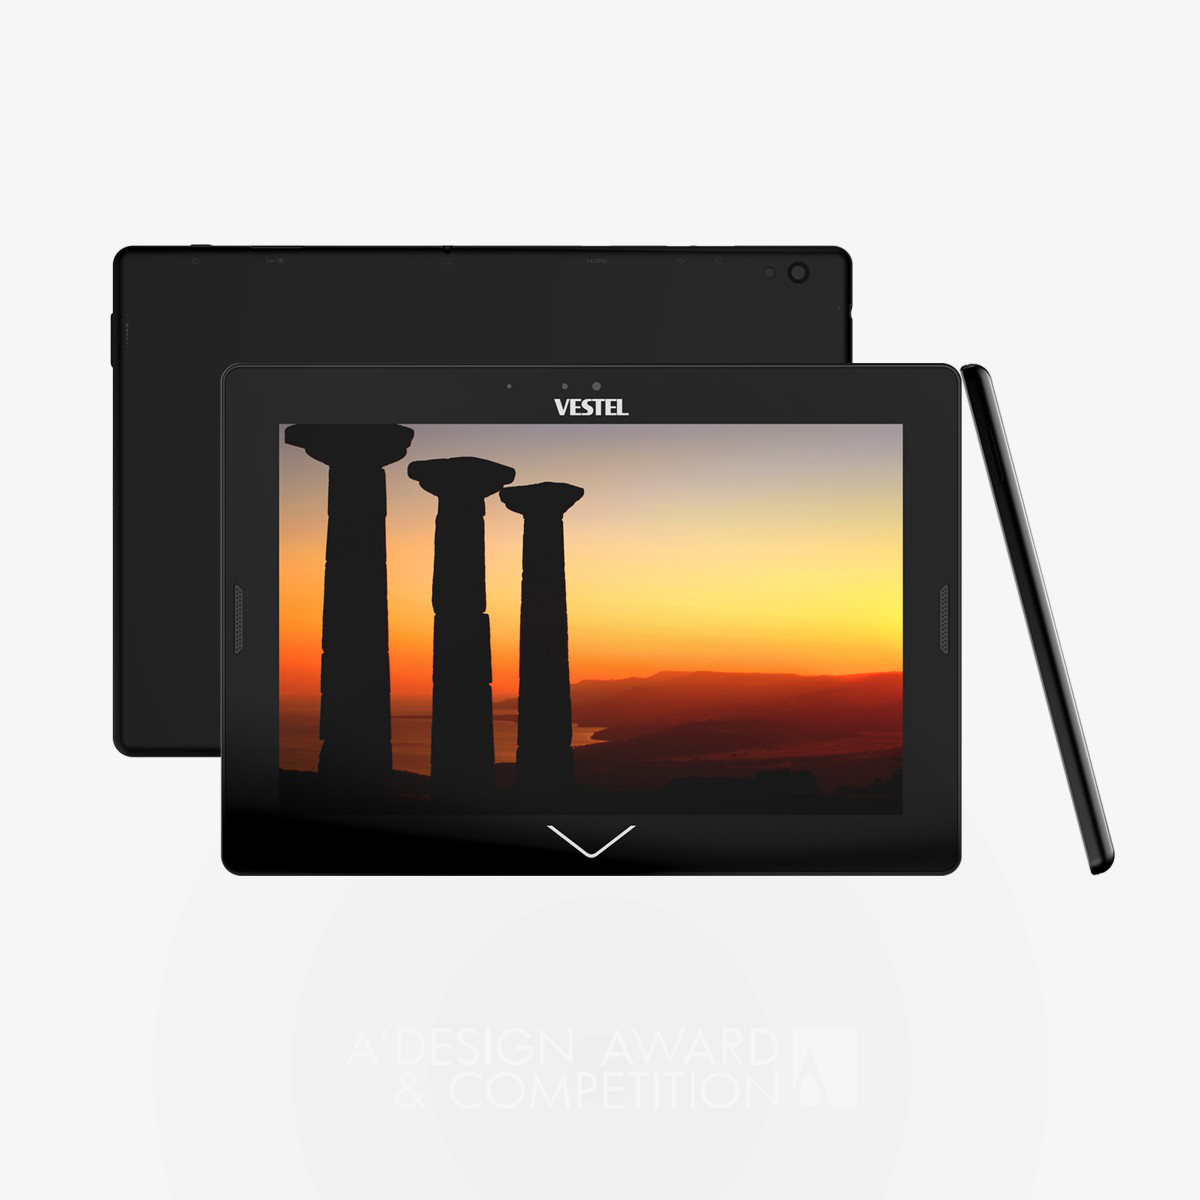 Venus 10" tablet PC tablet PC by Vestel ID Team